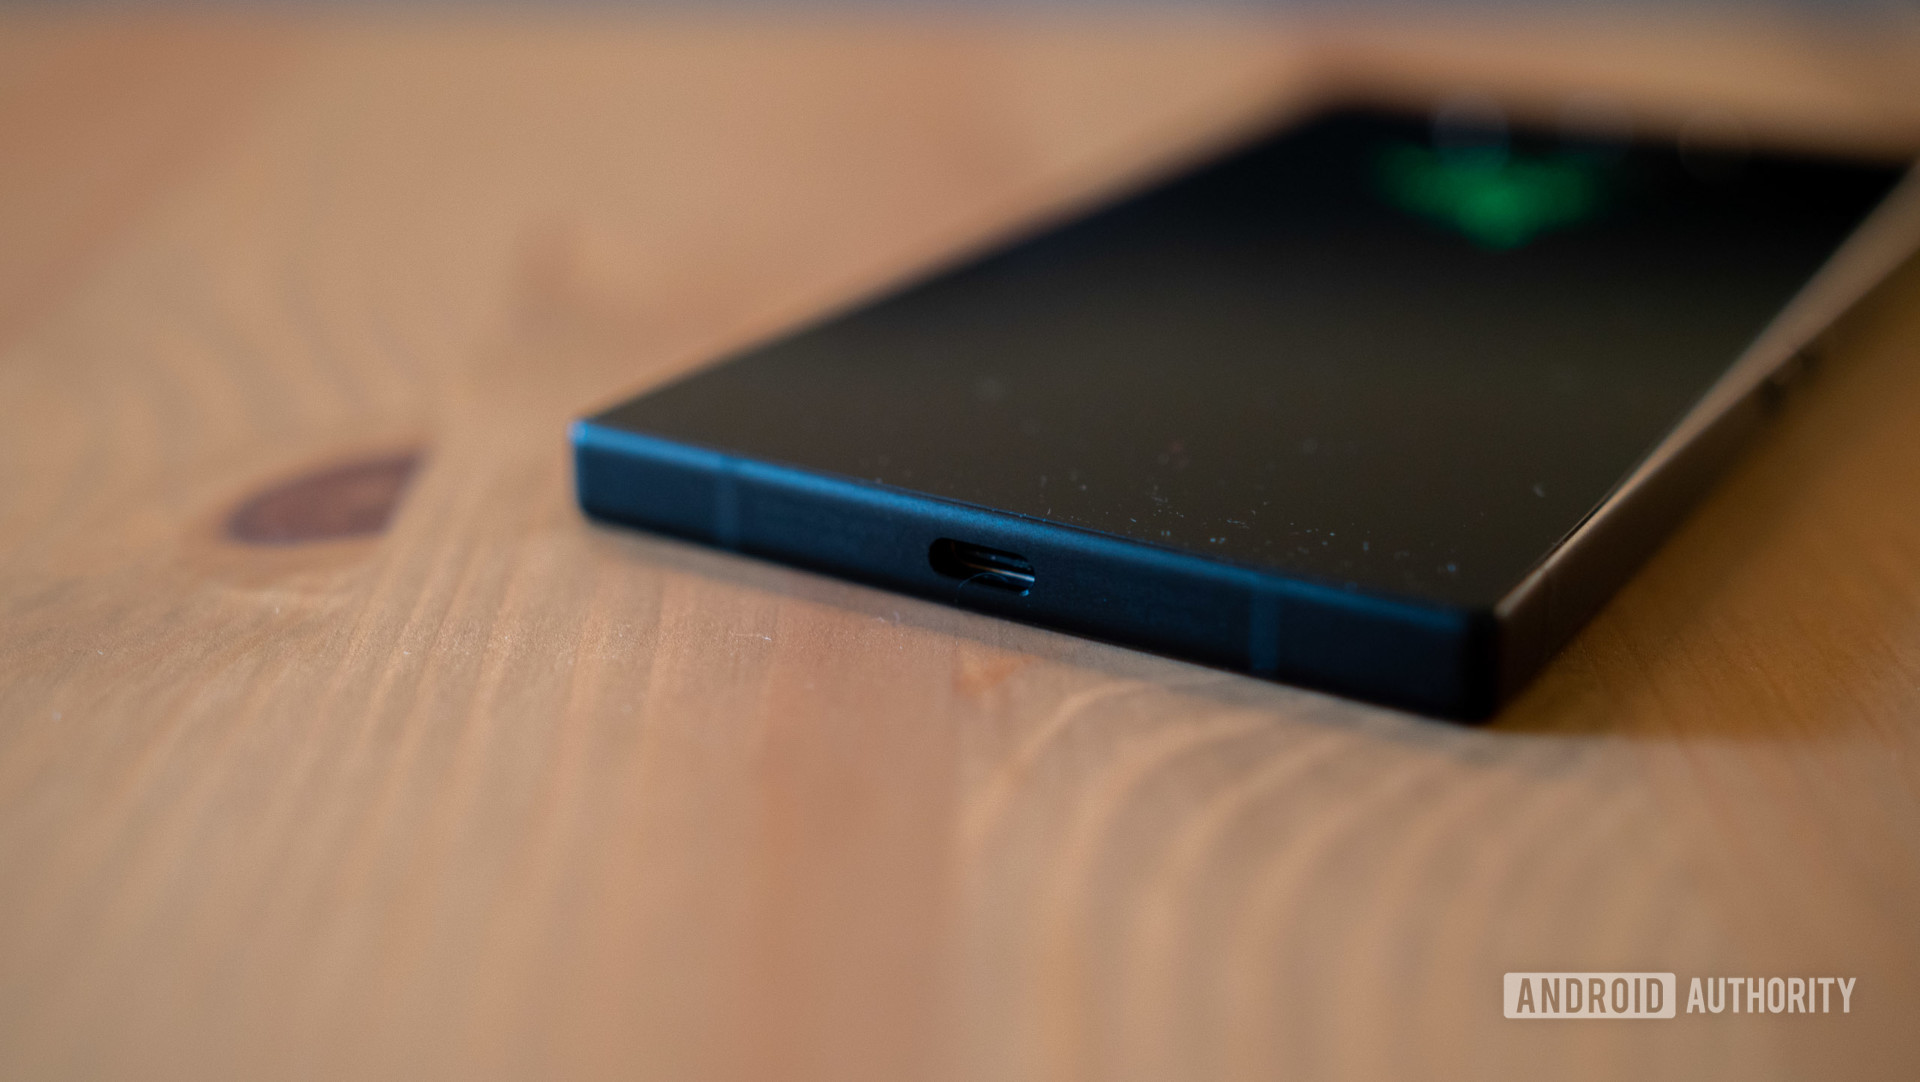 Bottom view of the Razer Phone 2 focusing on the USB Type-C port.